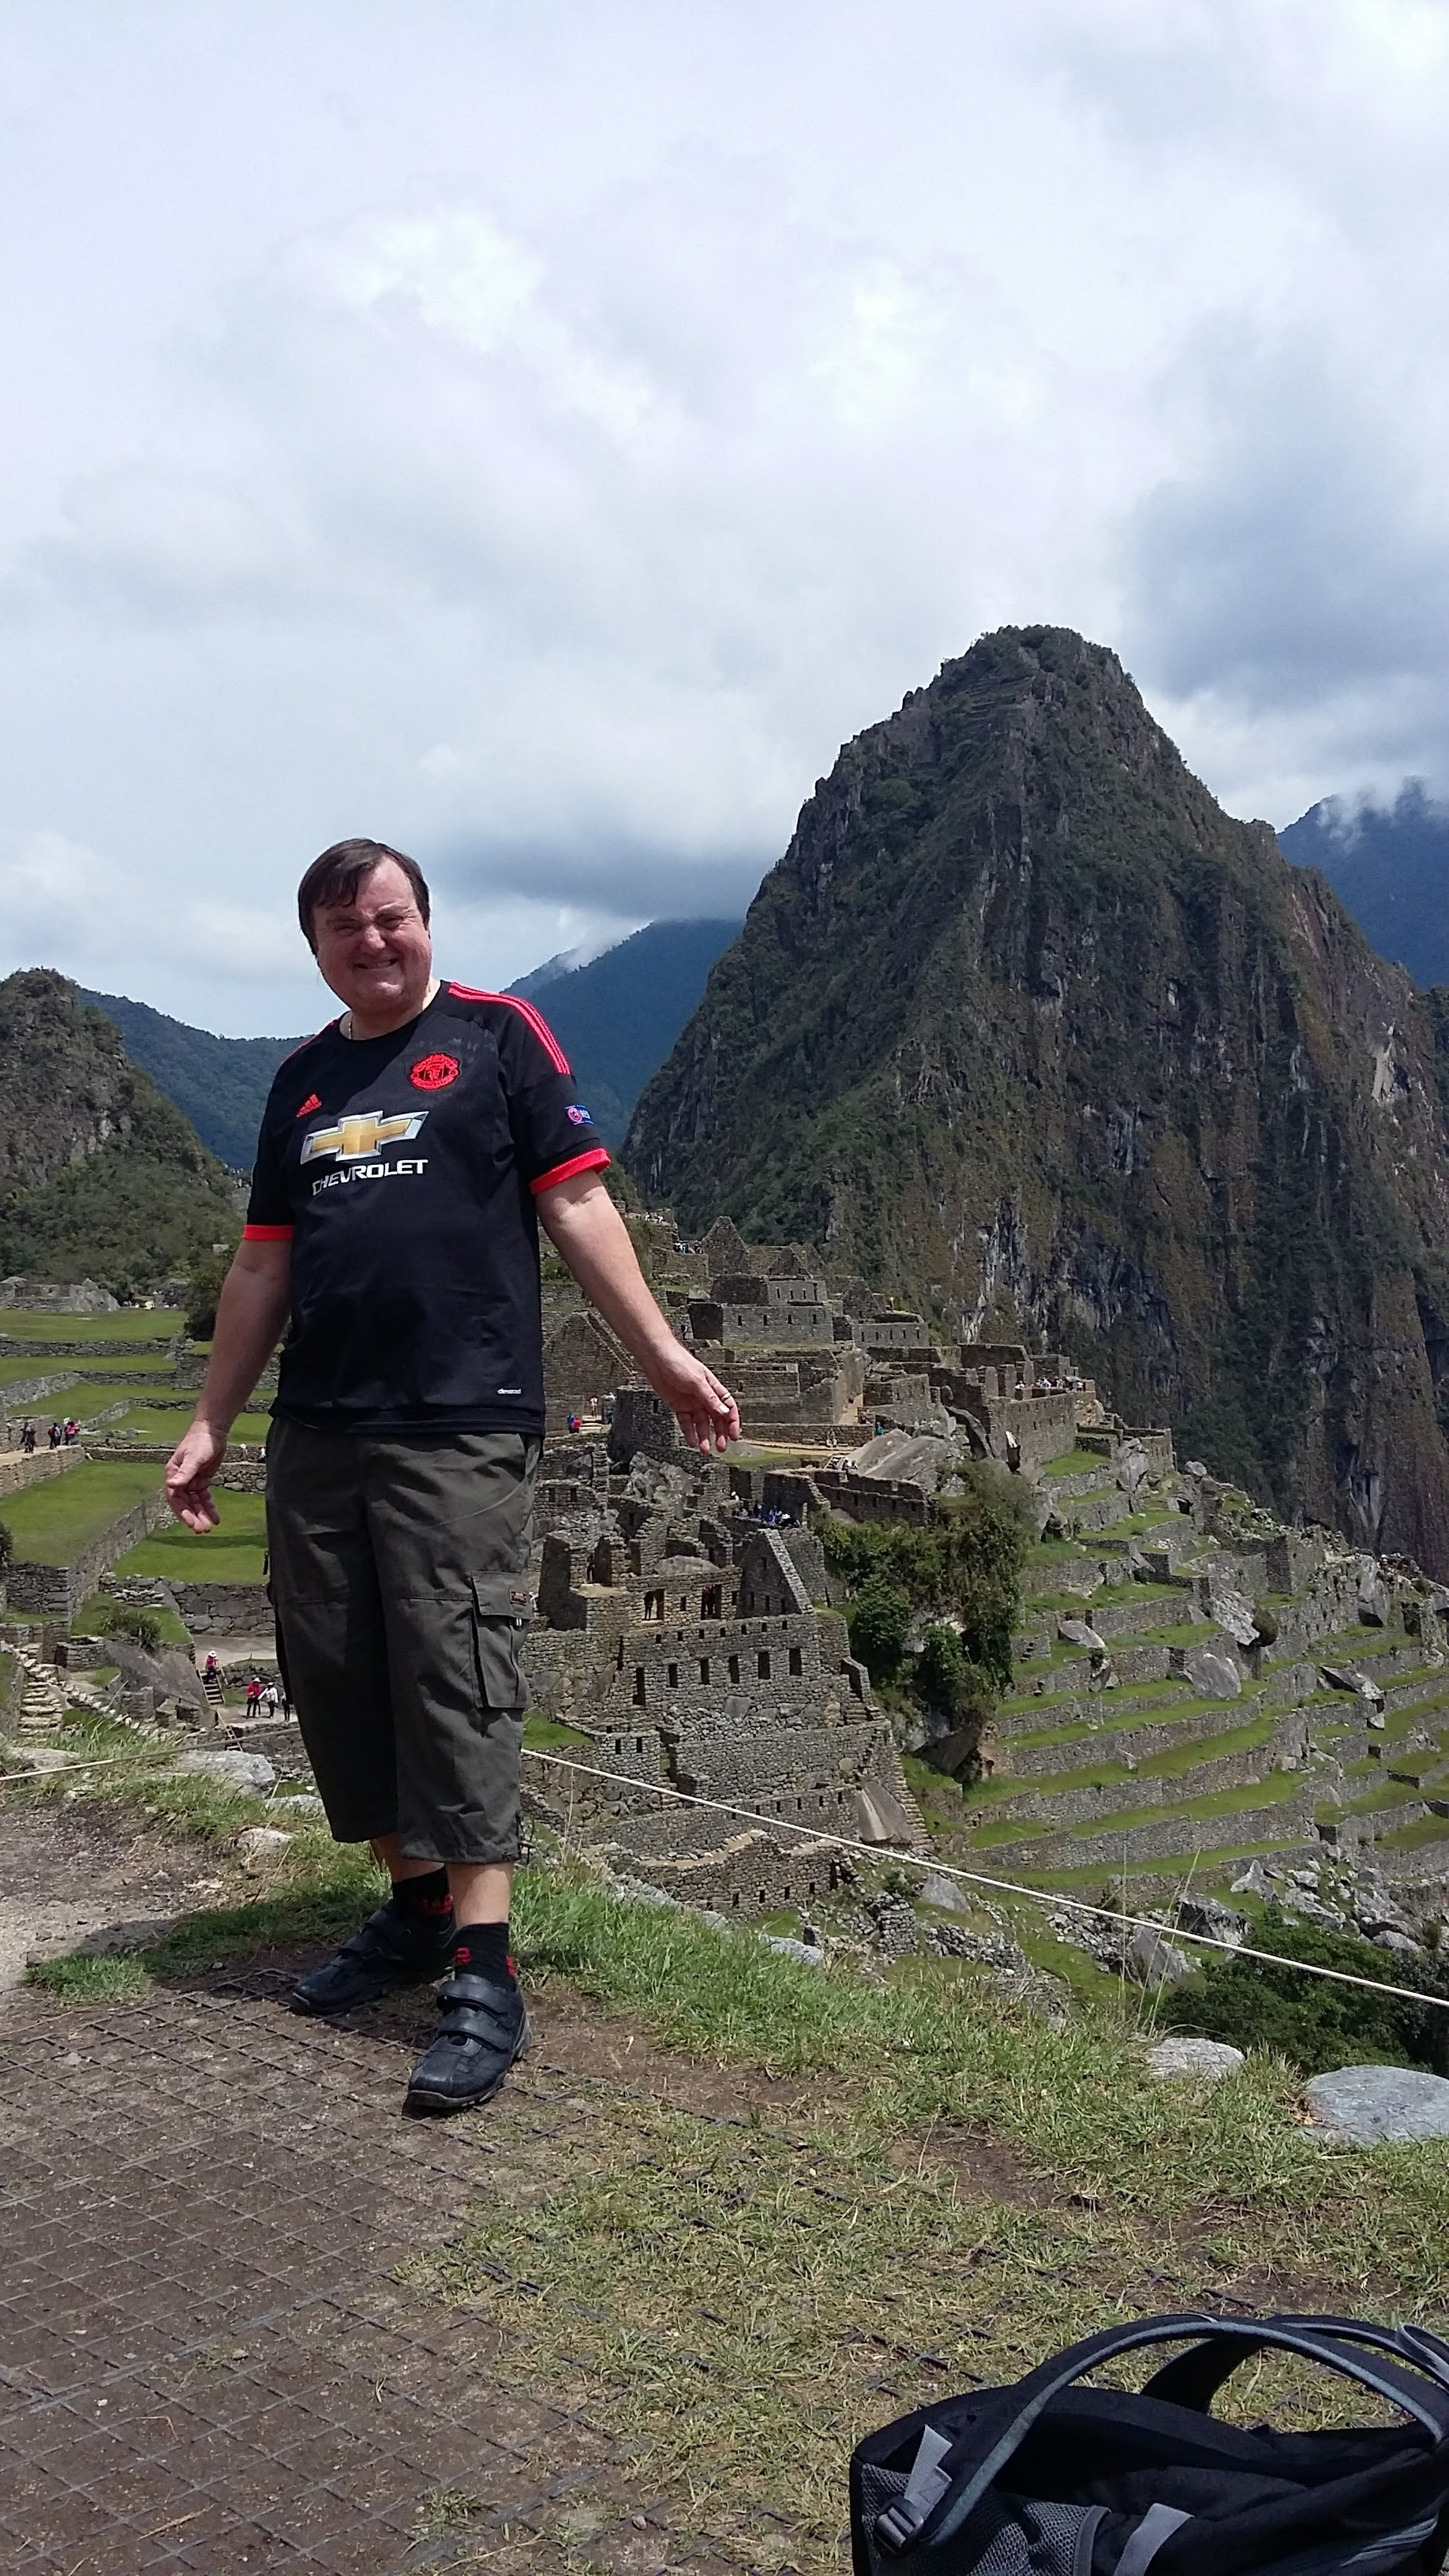 Machu Picchu, wonder of the world